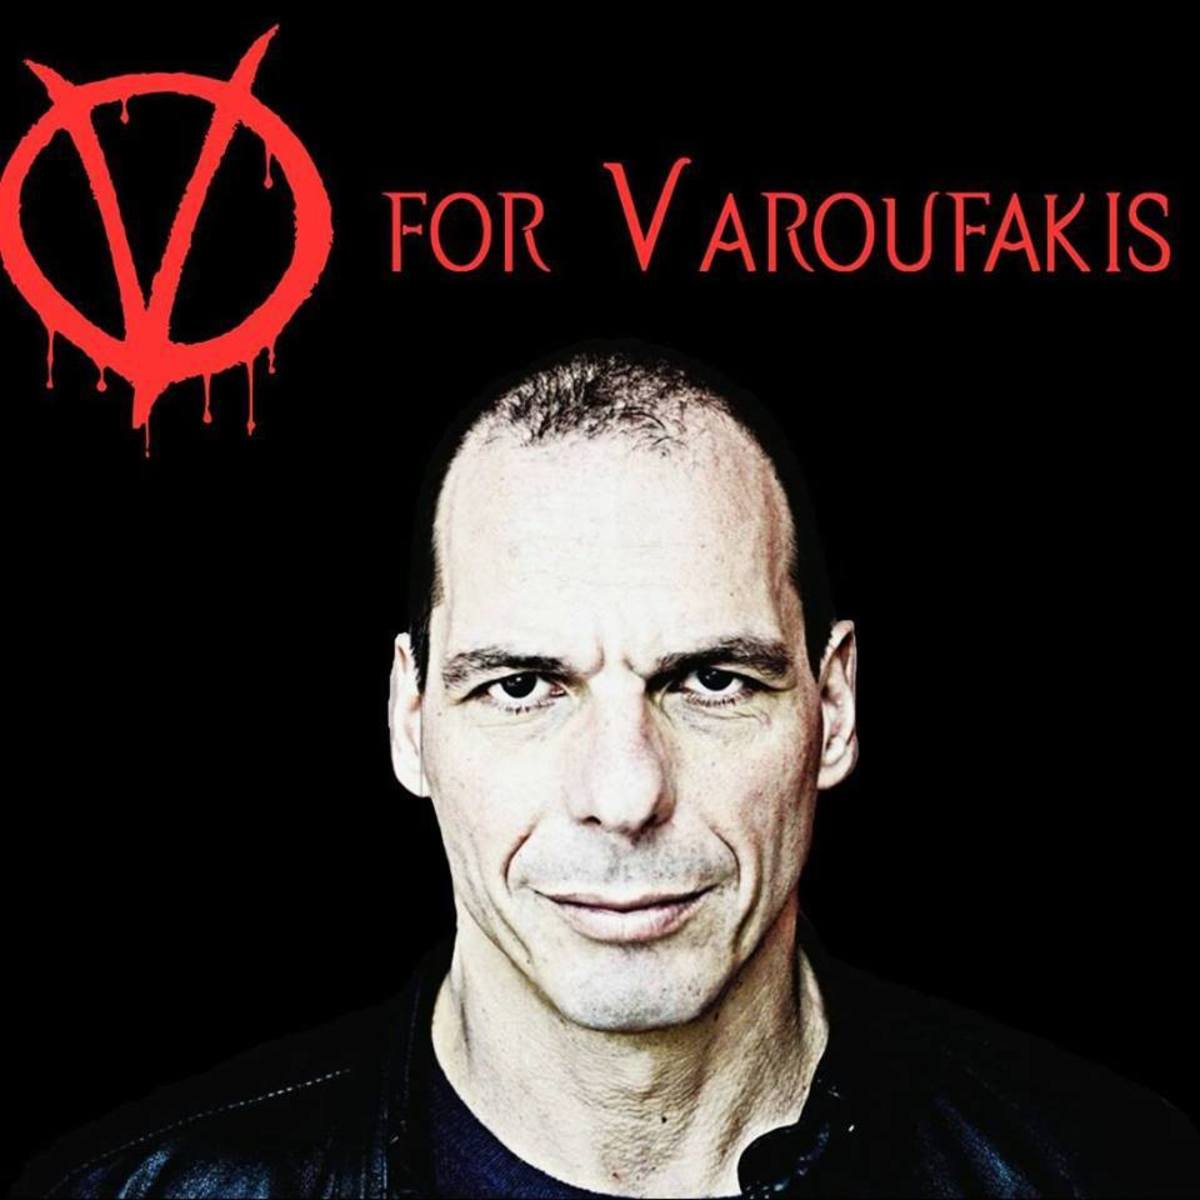 V for Varoufakis: Σελίδα στο Facebook για τον… σταρ υπουργό